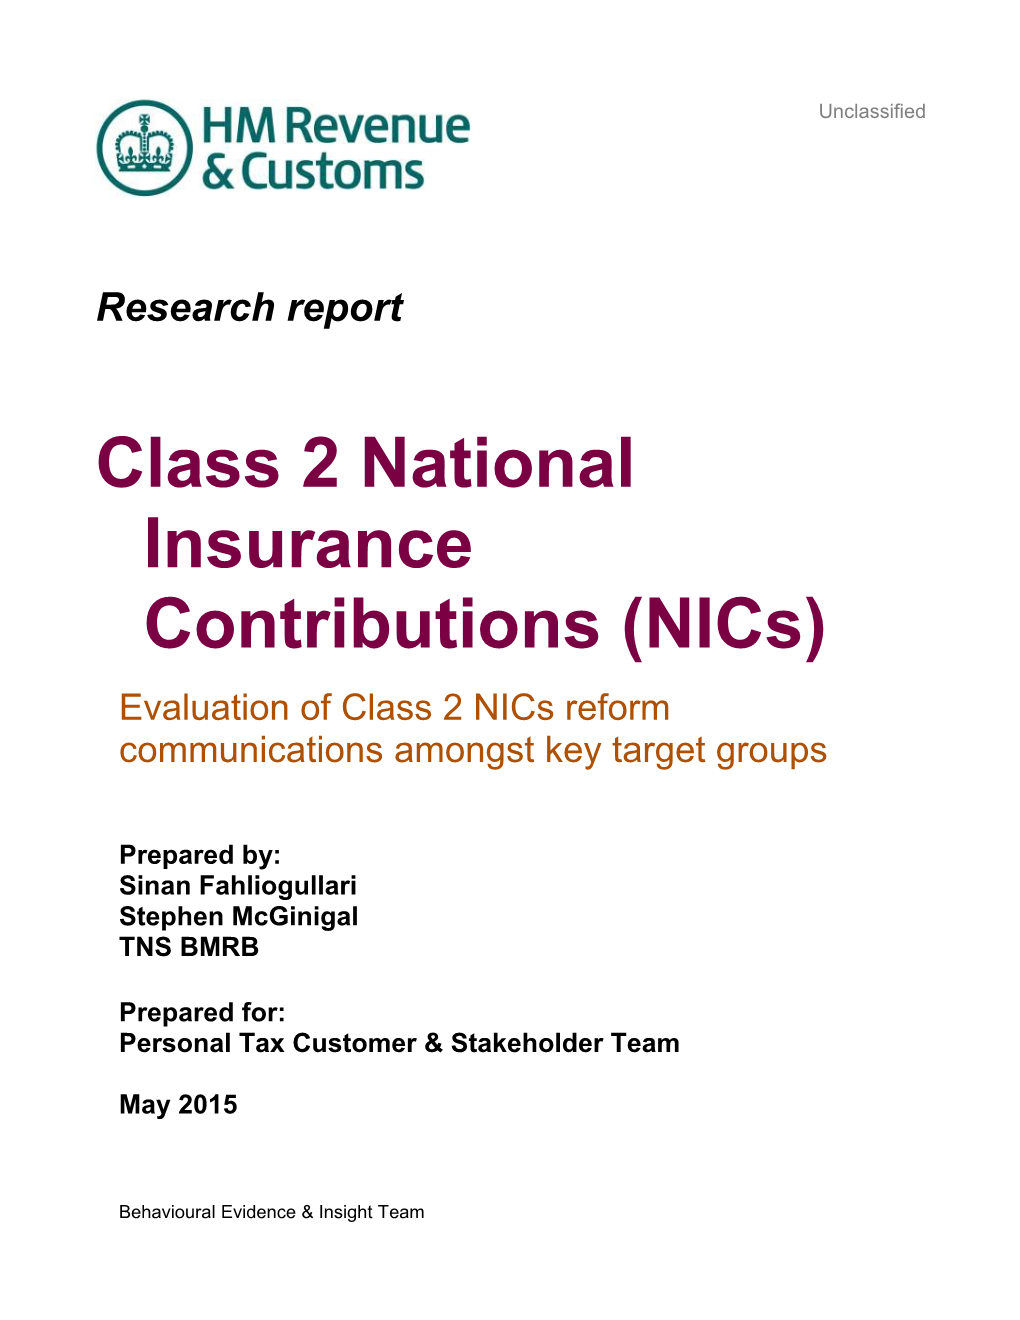 Evaluation of Class 2 National Insurance Contributions (Nics) Reform Communications Amongst